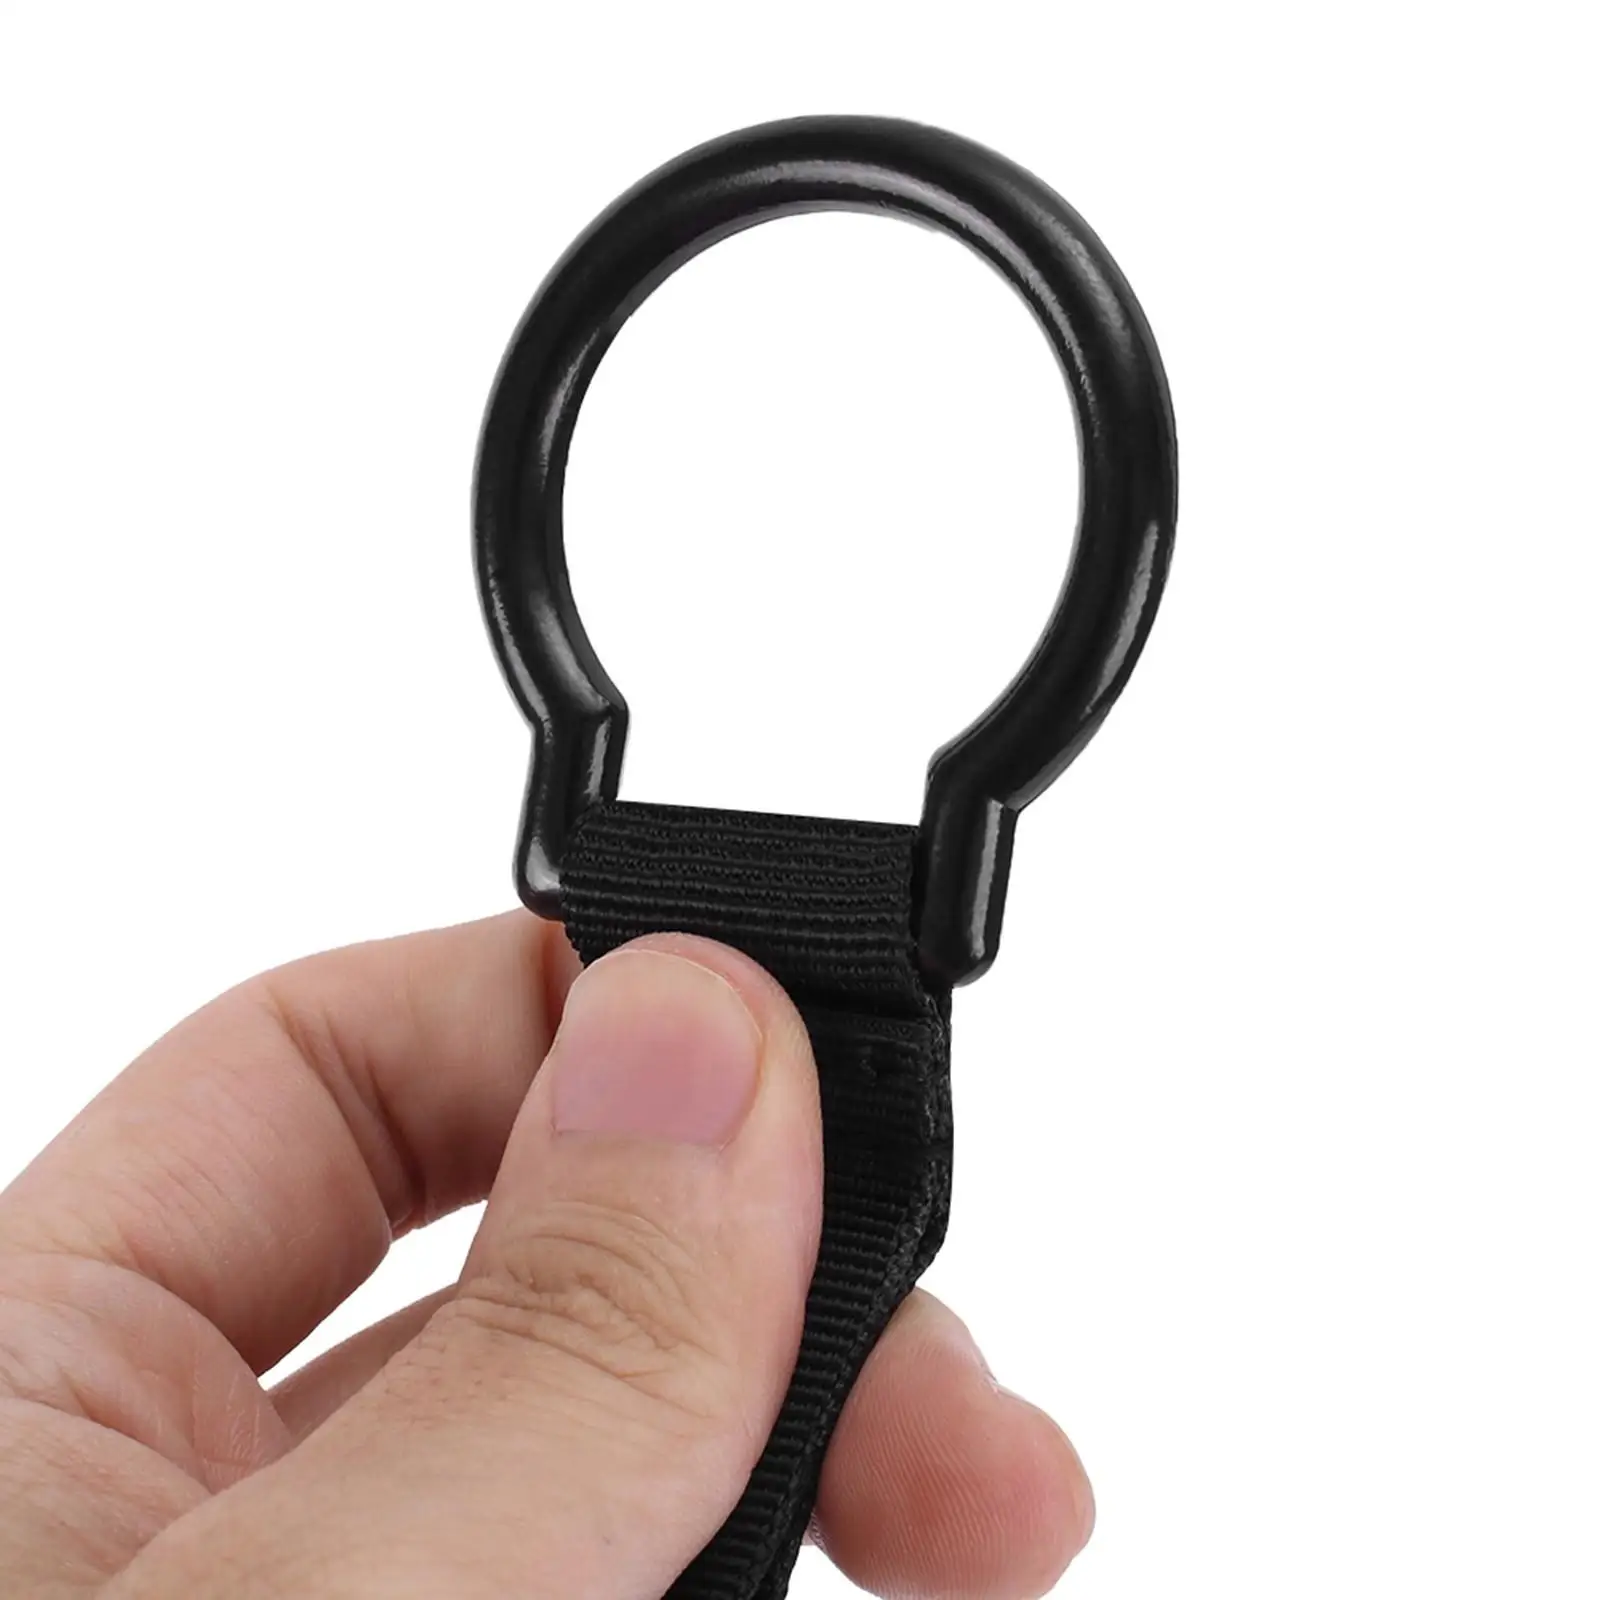 Flashlight Rings Slide On Belt Replaces Professional Adjustment Finger Ring Clip Lightweight Flashlight Holster for